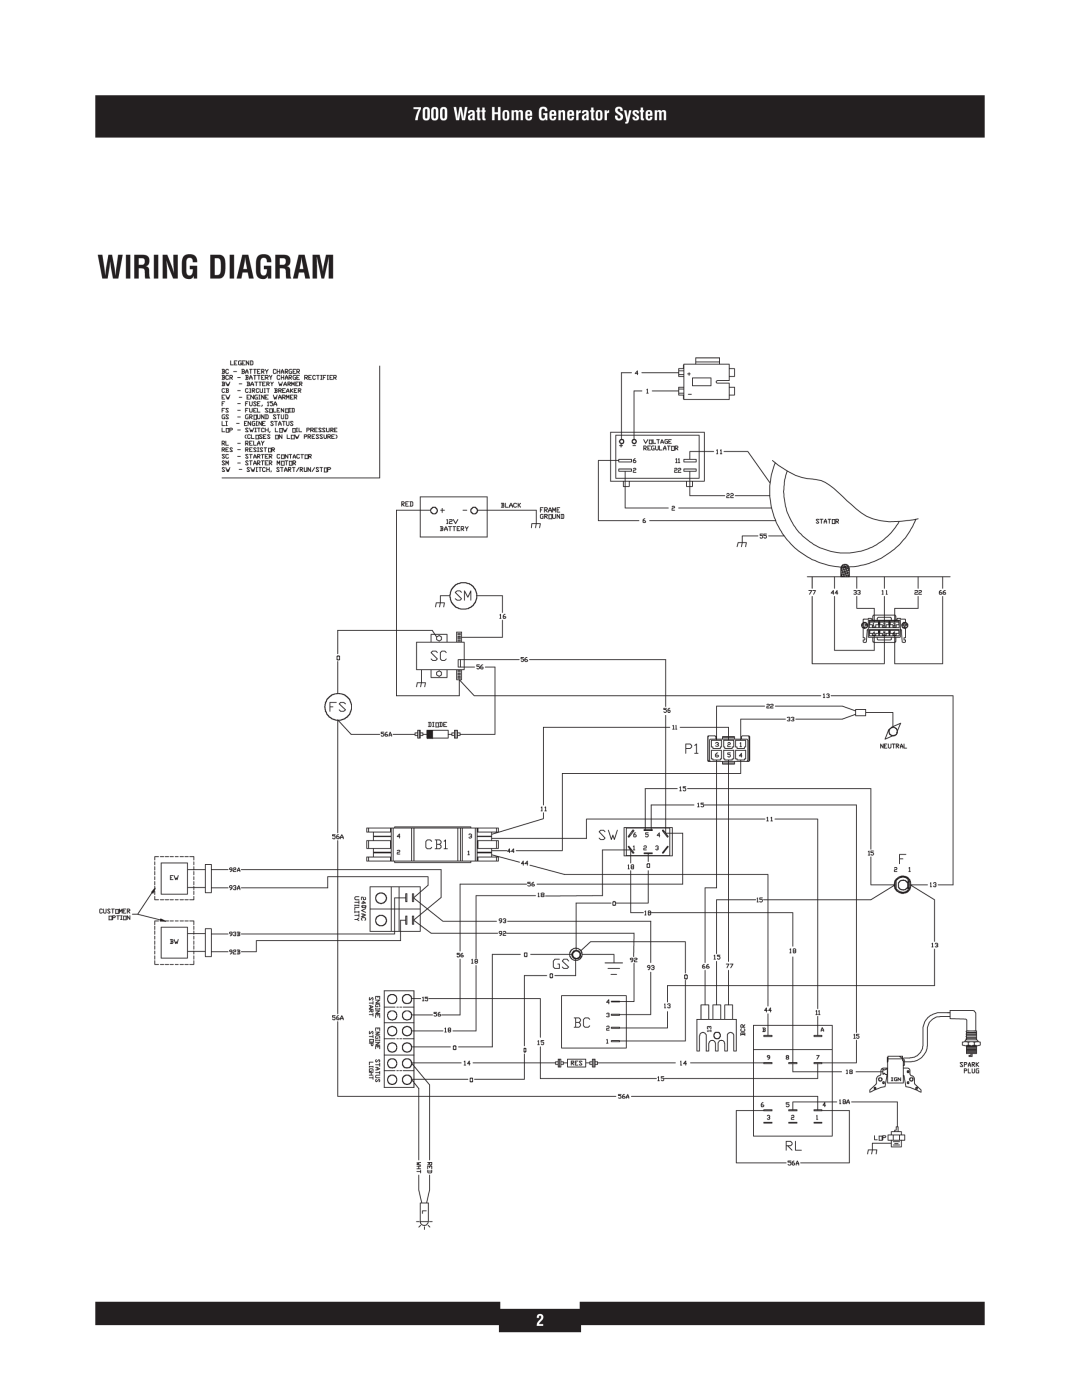 Briggs & Stratton 030372 manual Wiring Diagram, Watt Home Generator System 